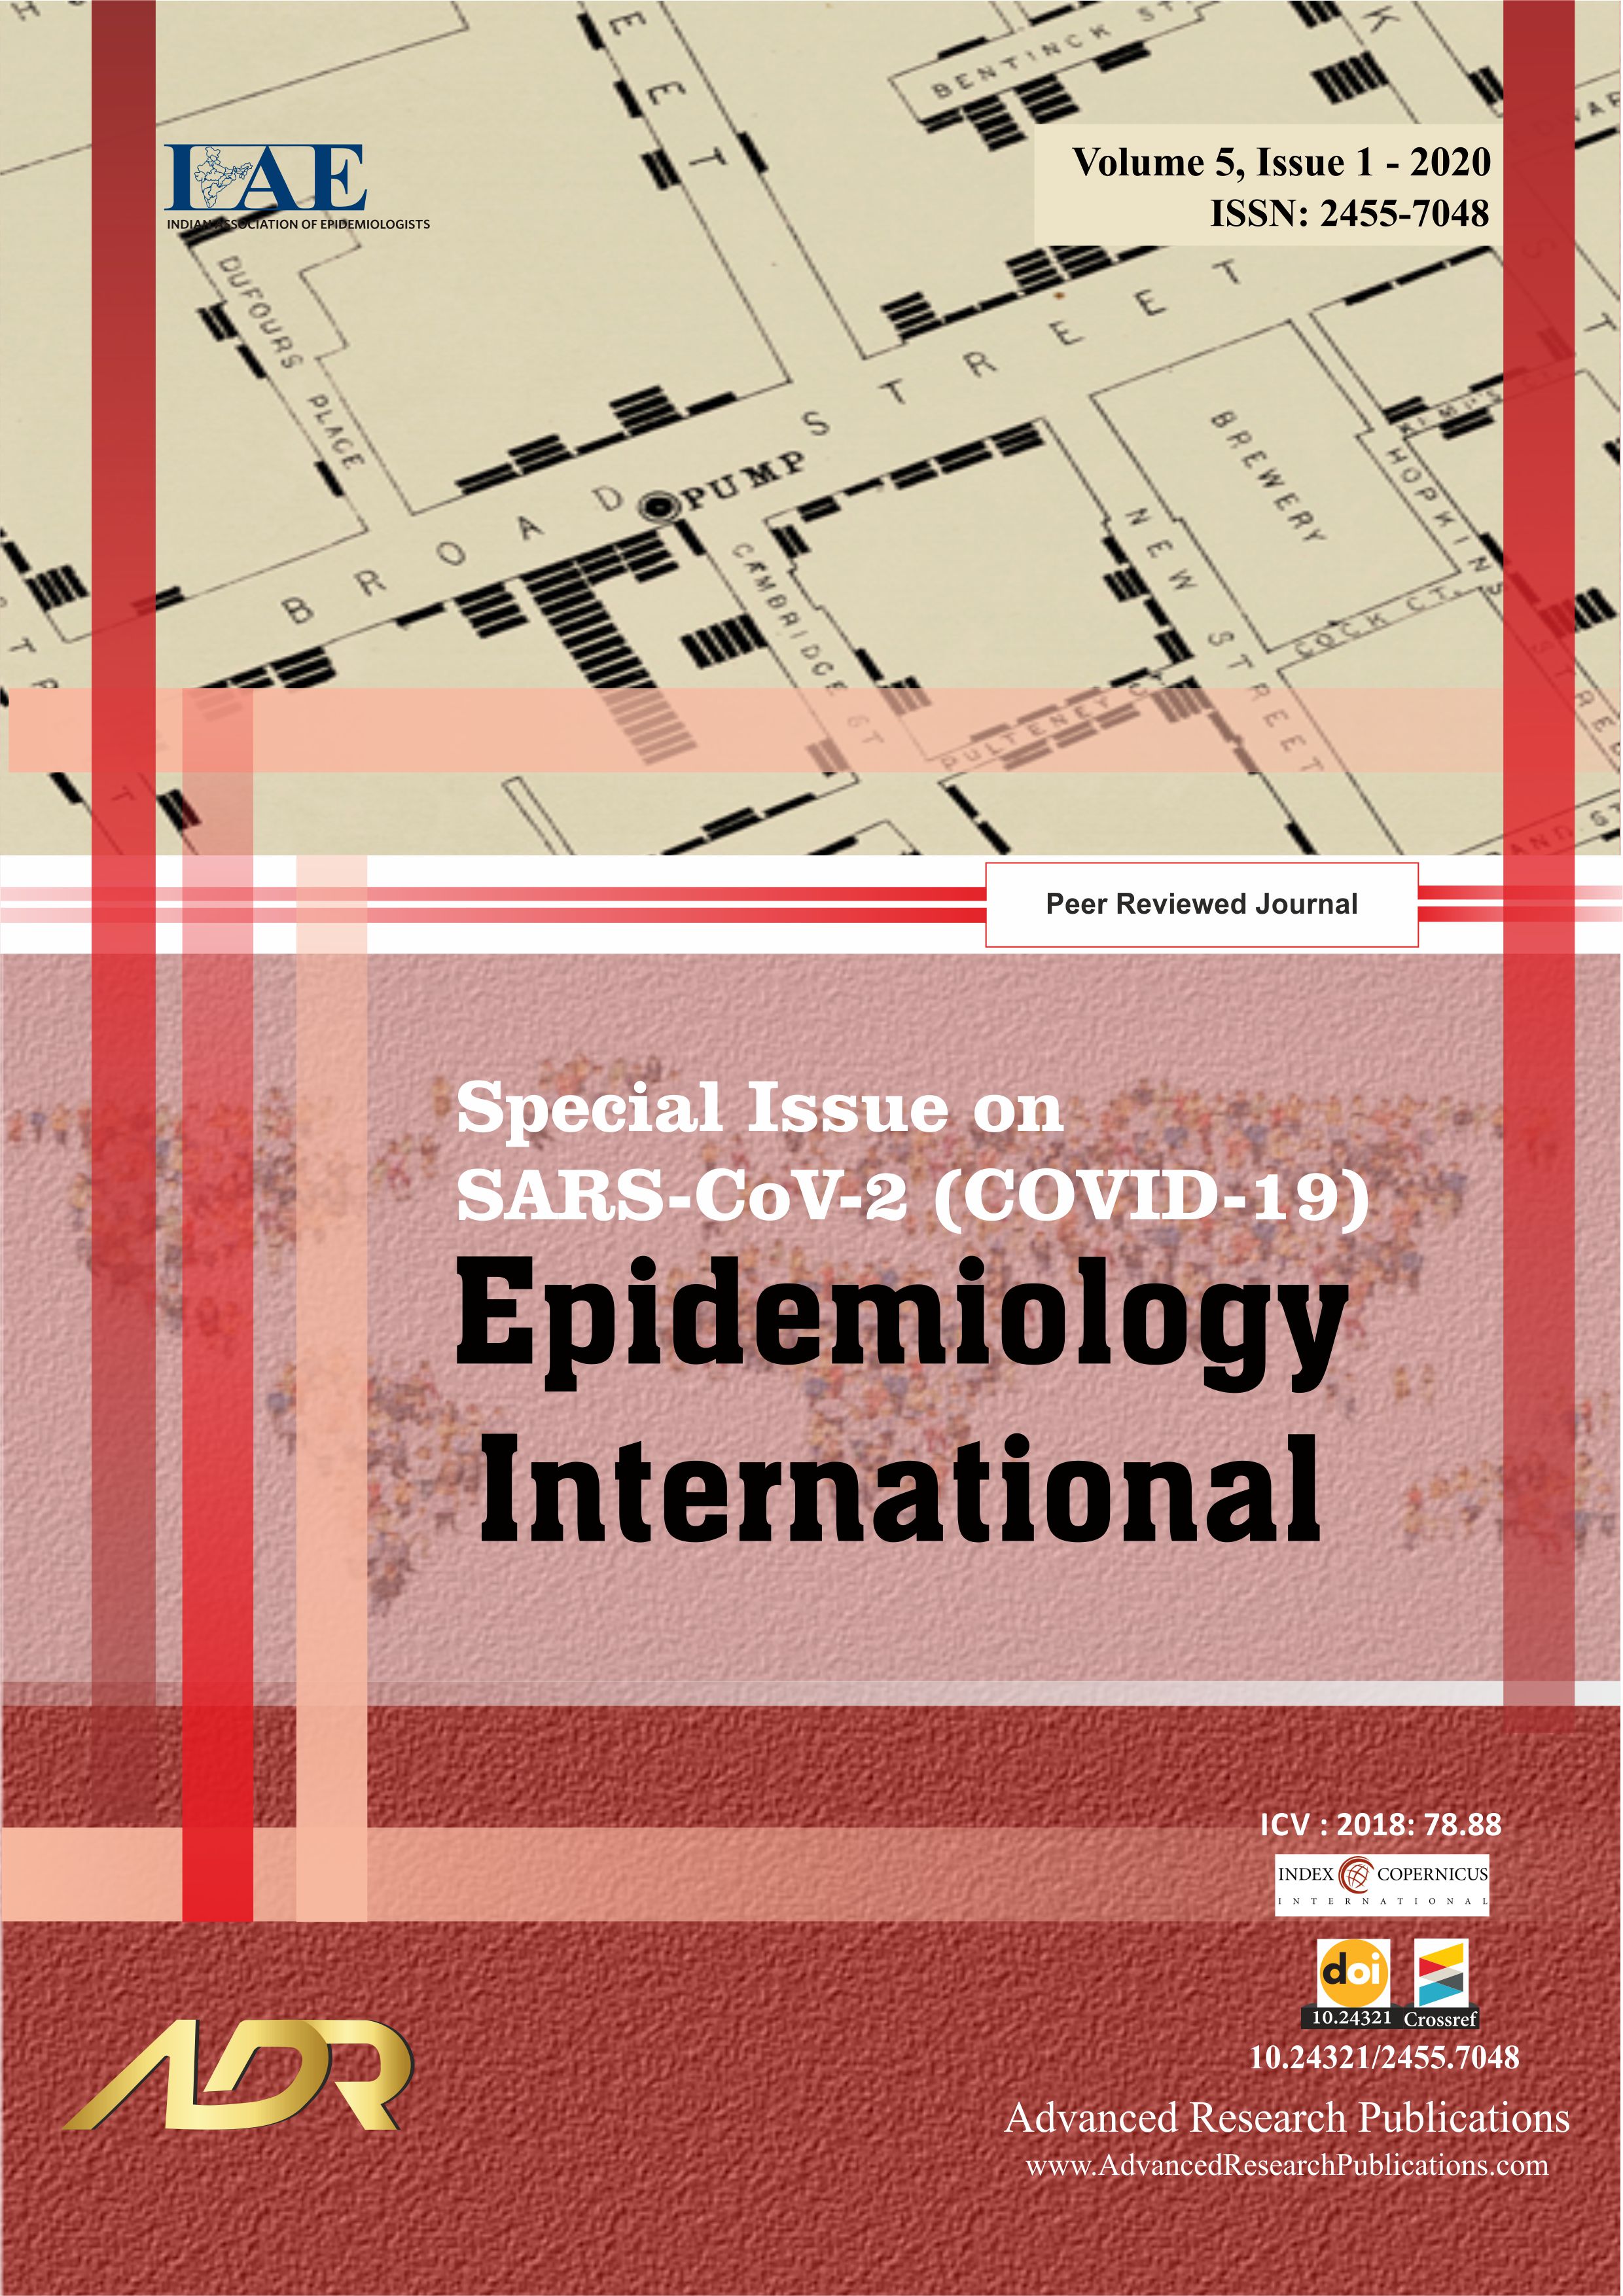 SARS-CoV-2 (COVID-19) - Epidemiology International